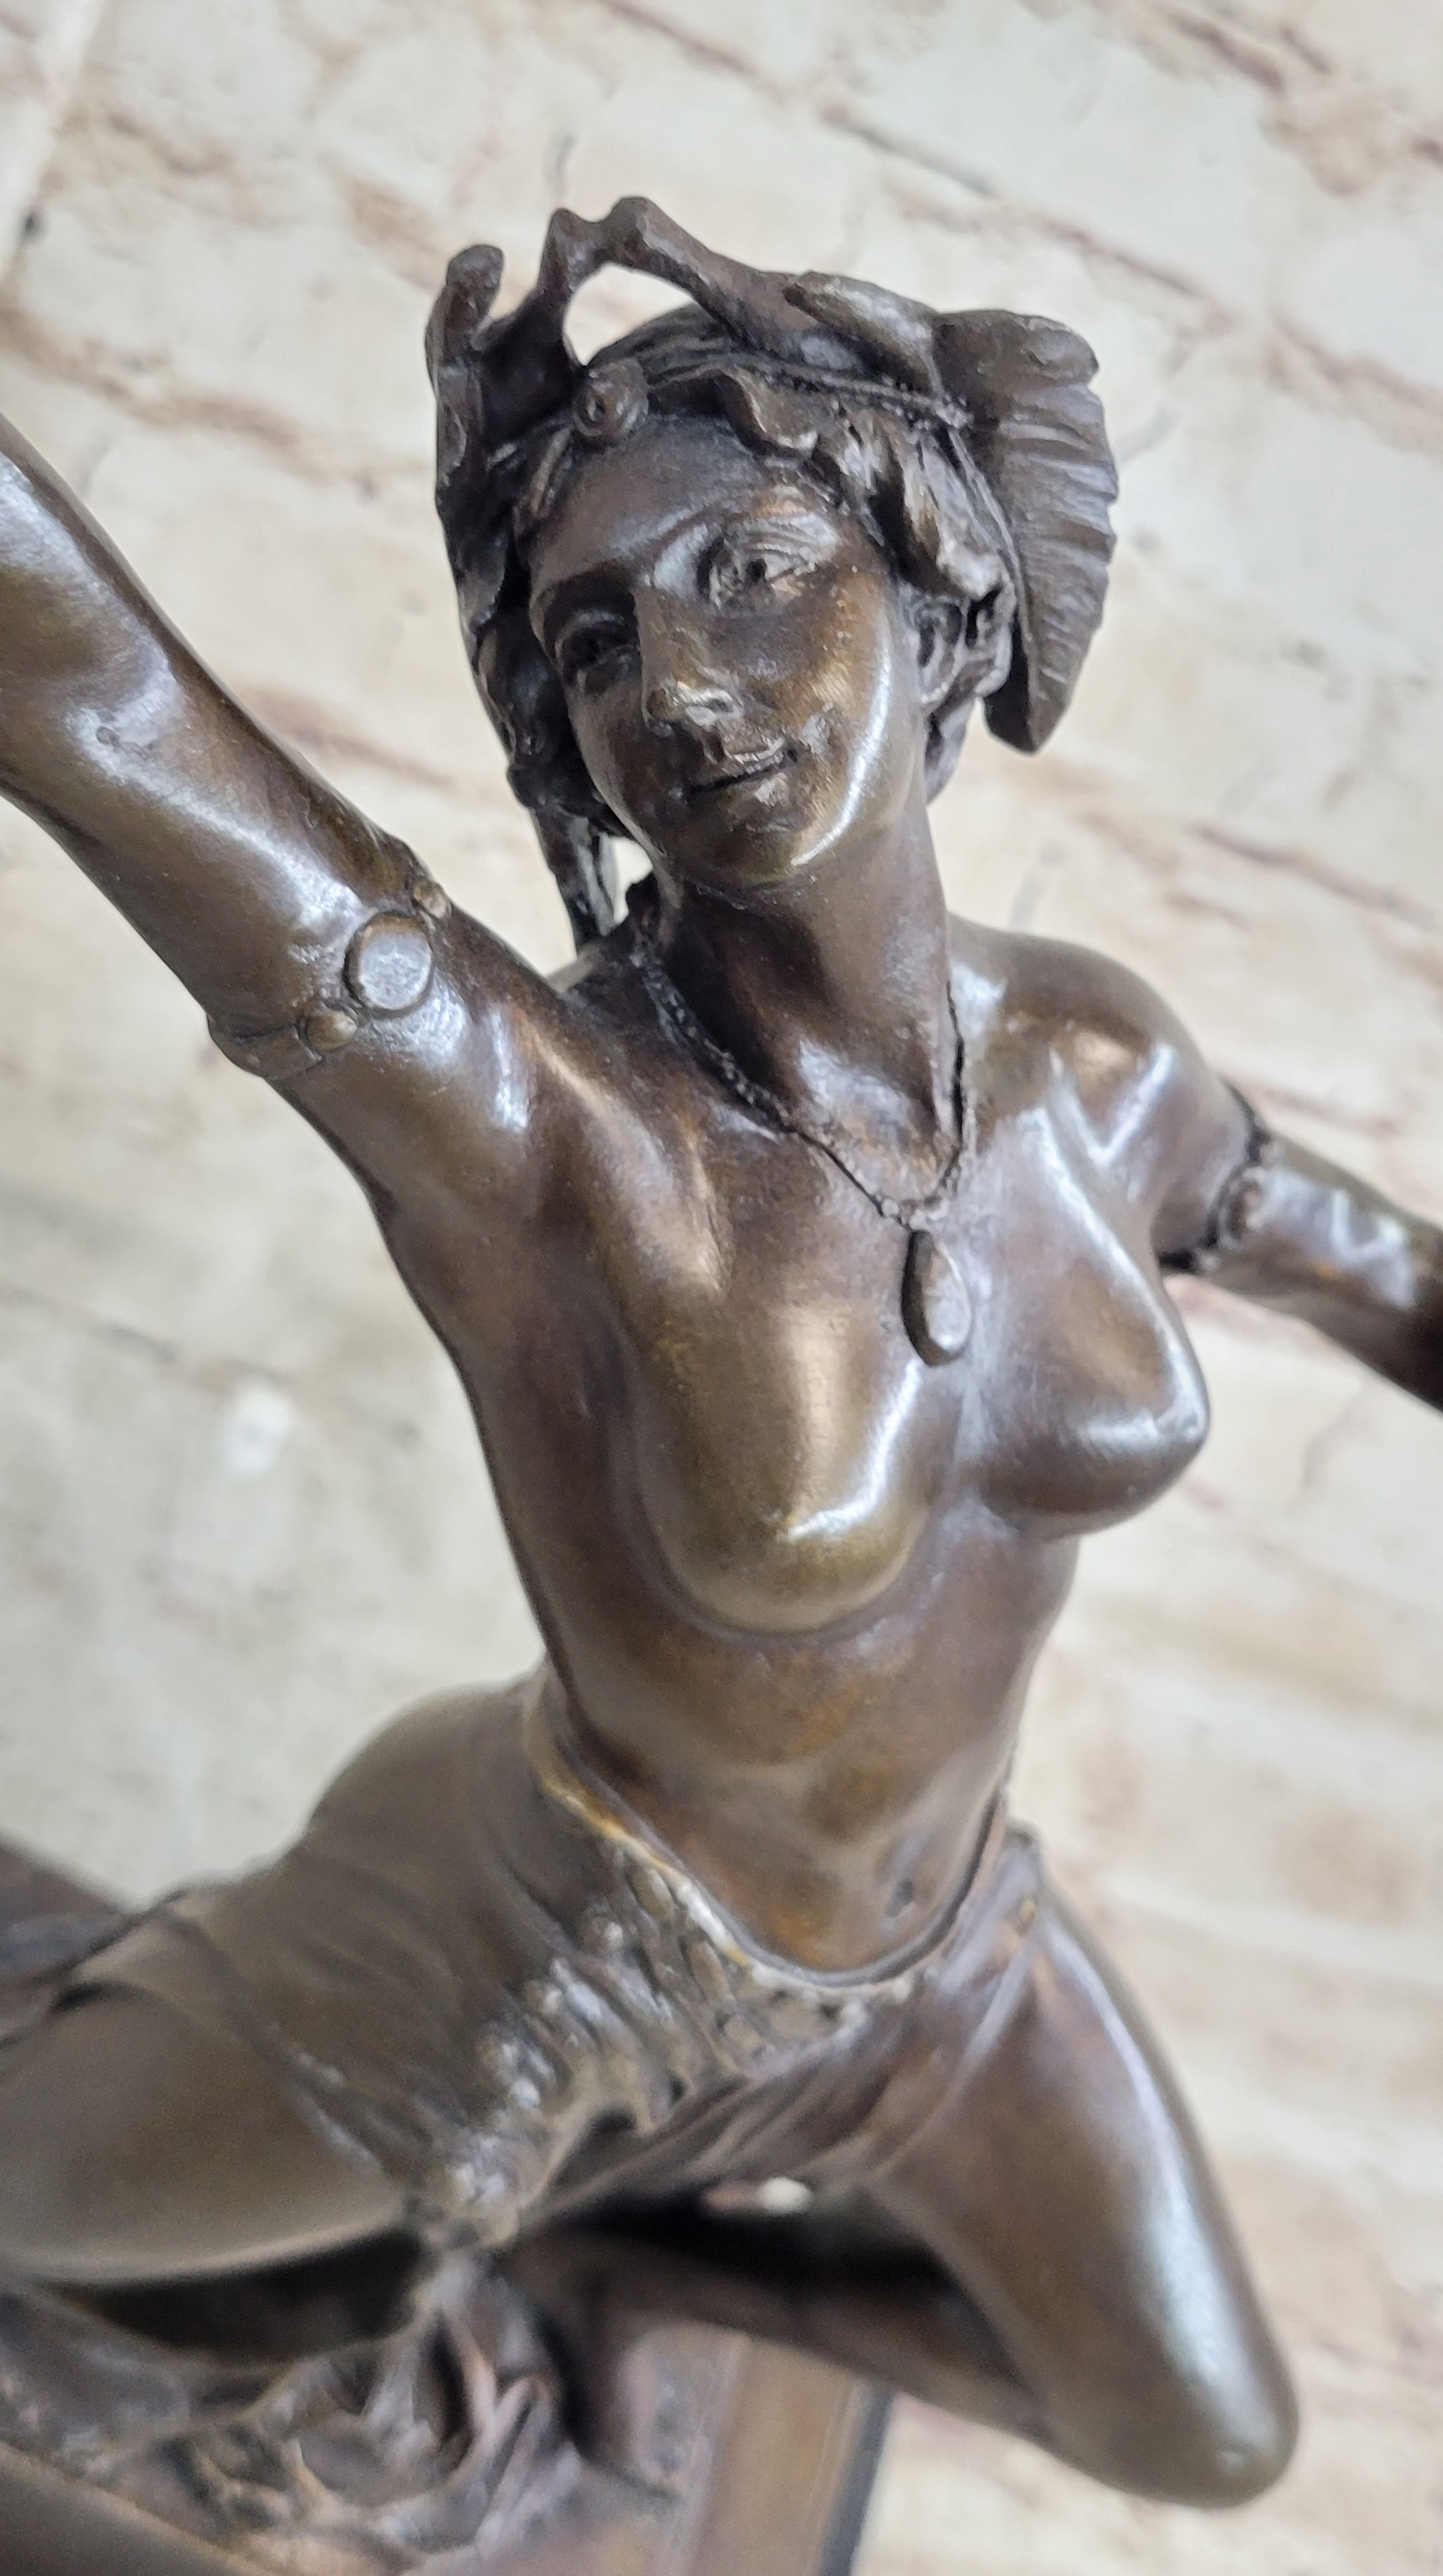 Handcrafted bronze sculpture SALE Decor Wreath Head Dancer Belly Nude Exotic